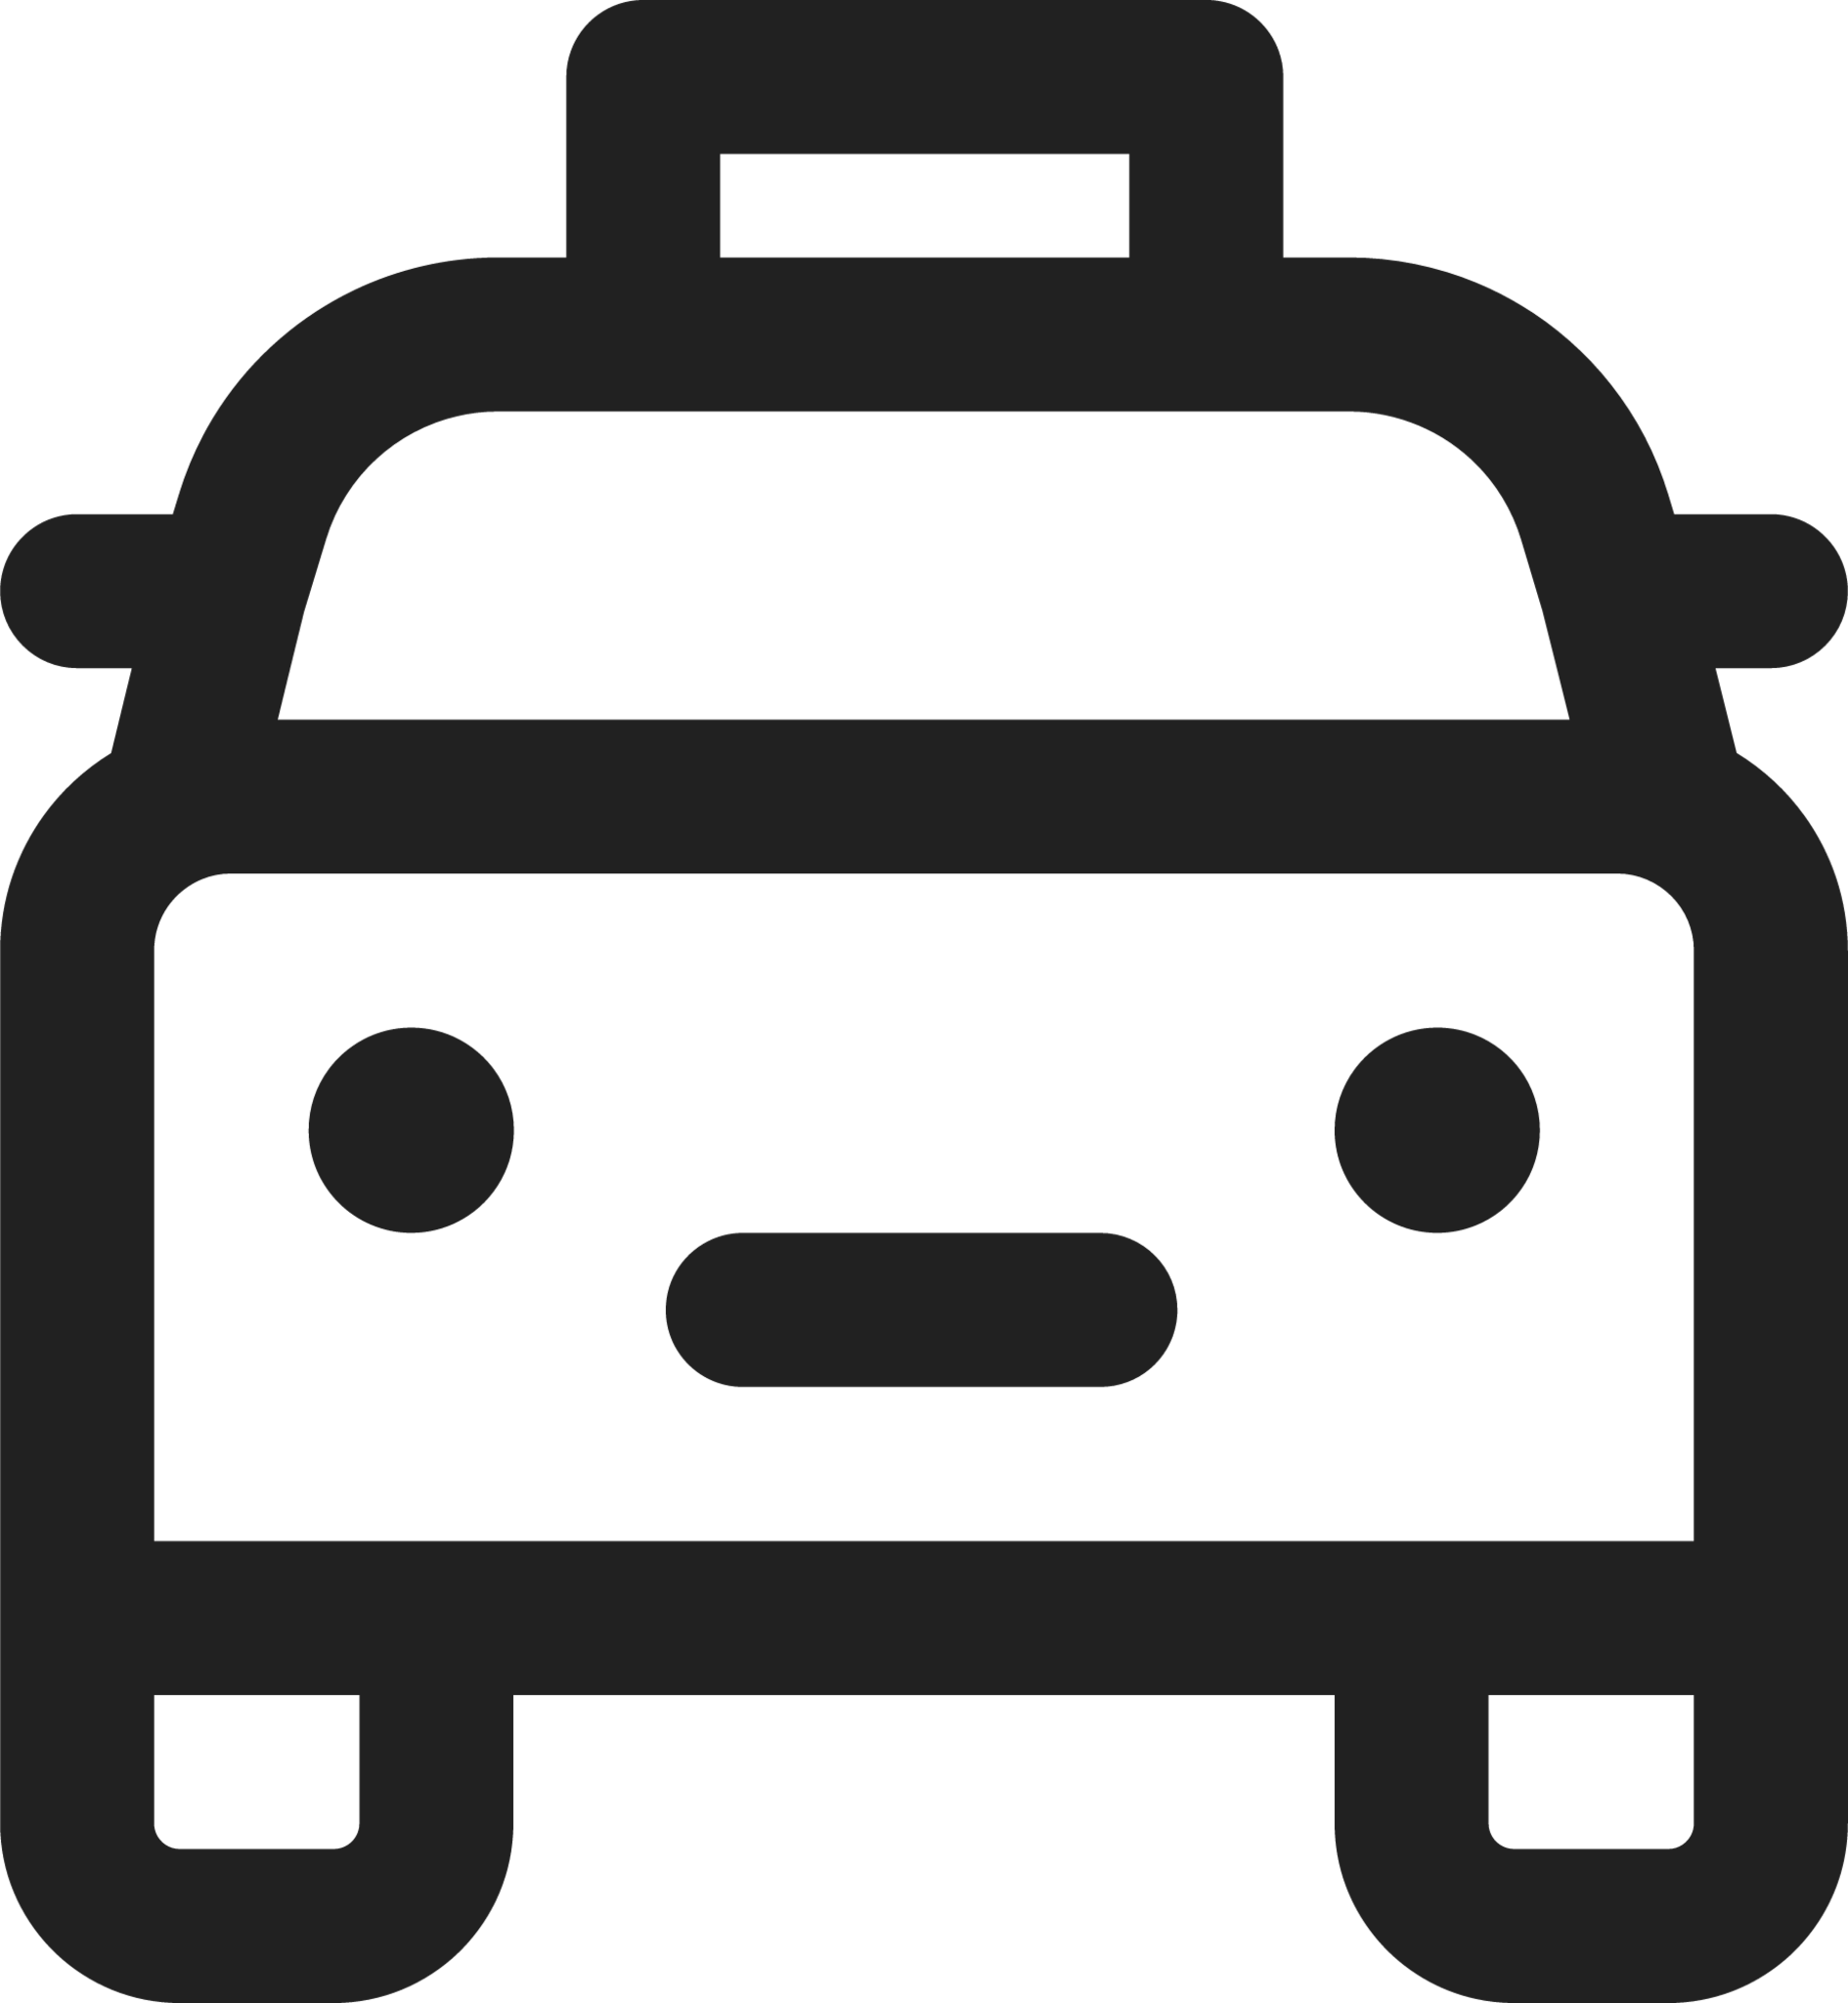 Vehicle Cab icon